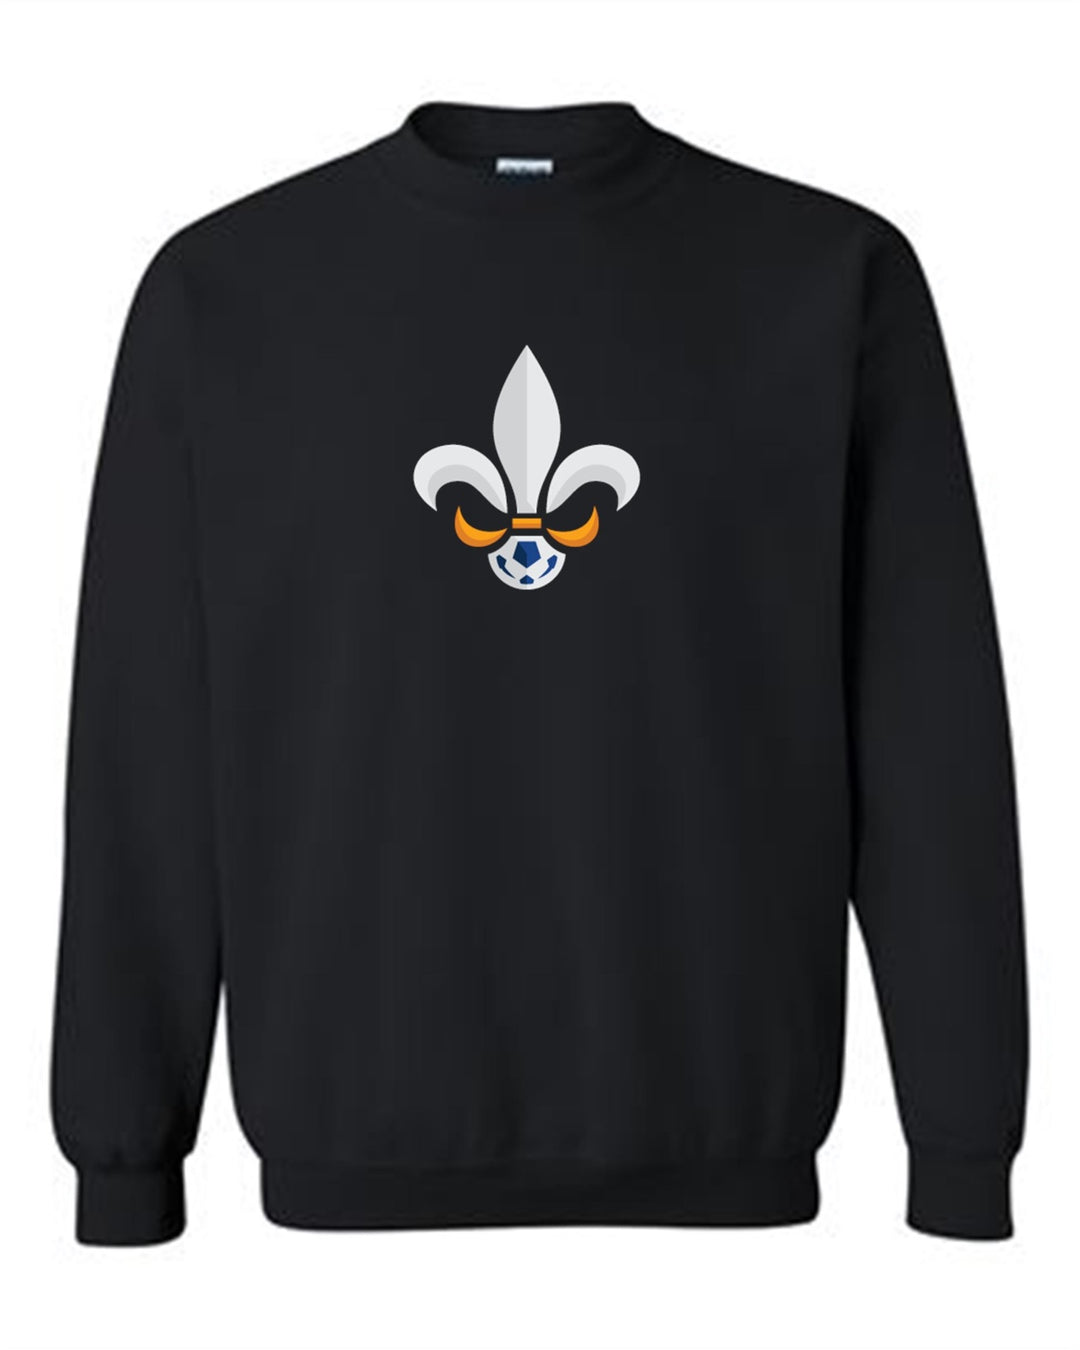 Louisiana Select Logo Crew Neck Sweatshirt LA ODP Spiritwear Black Youth Small - Third Coast Soccer